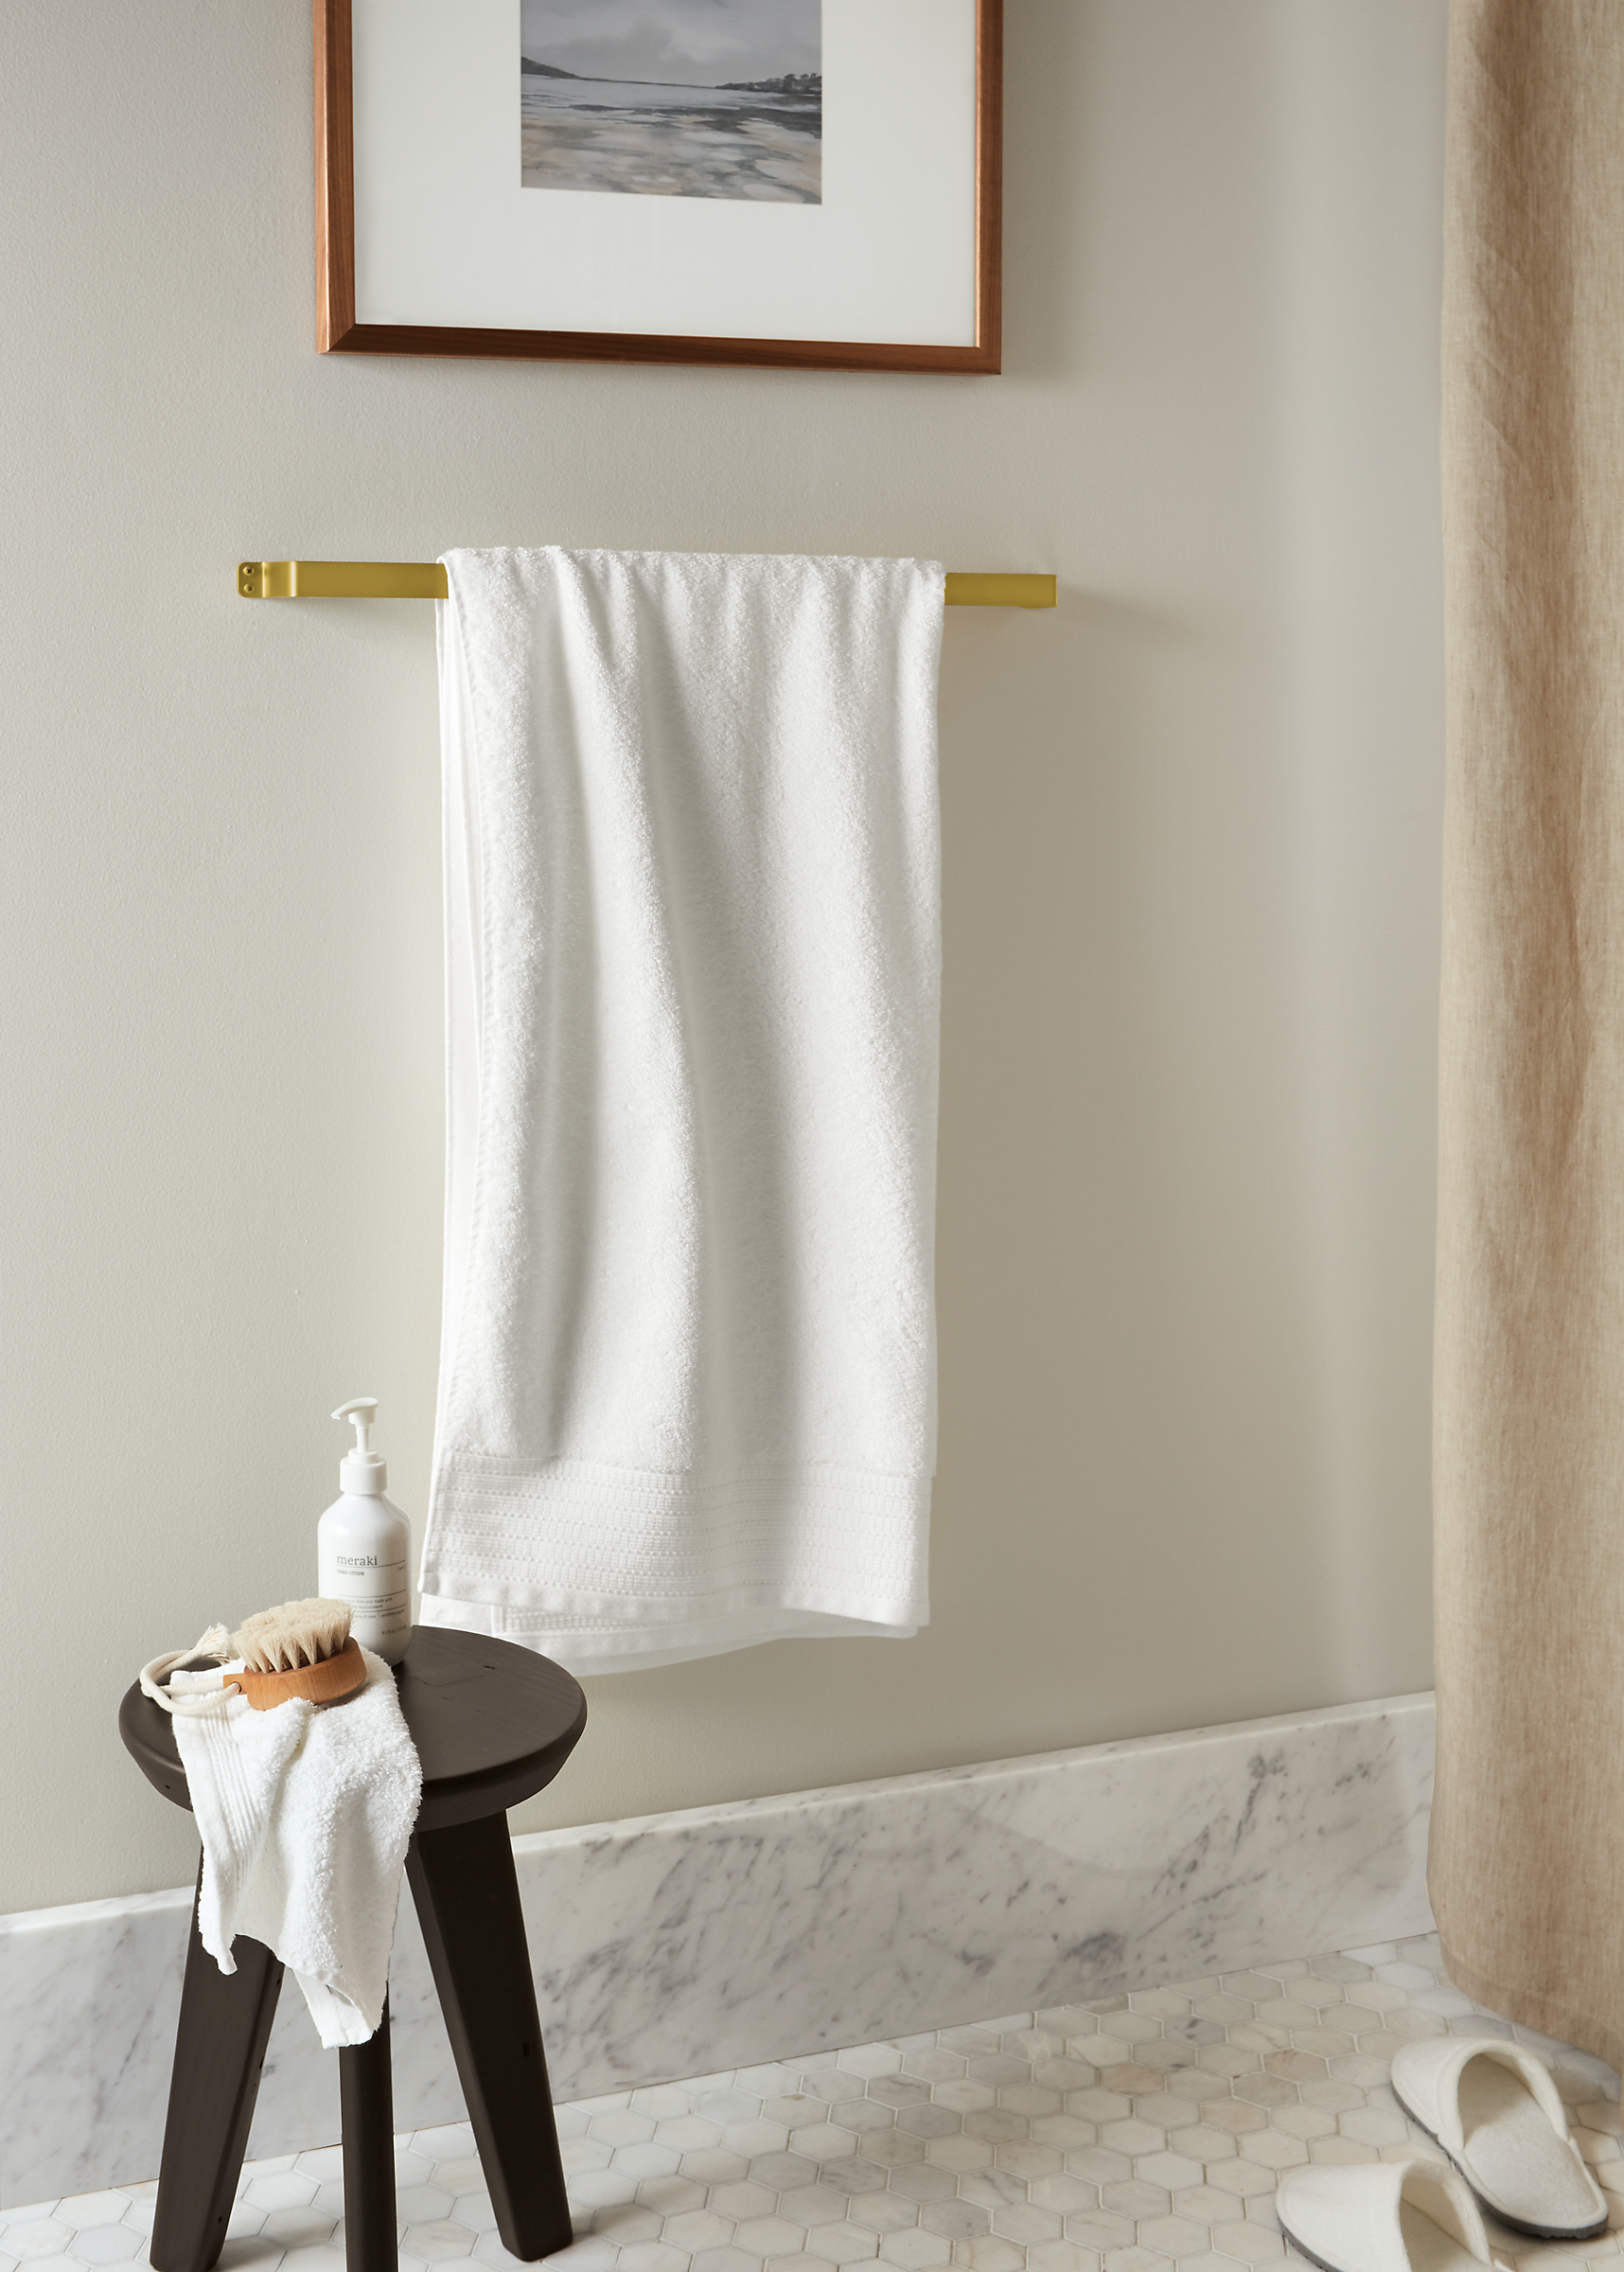 bend towel rack in gold holding fendwick towel in white